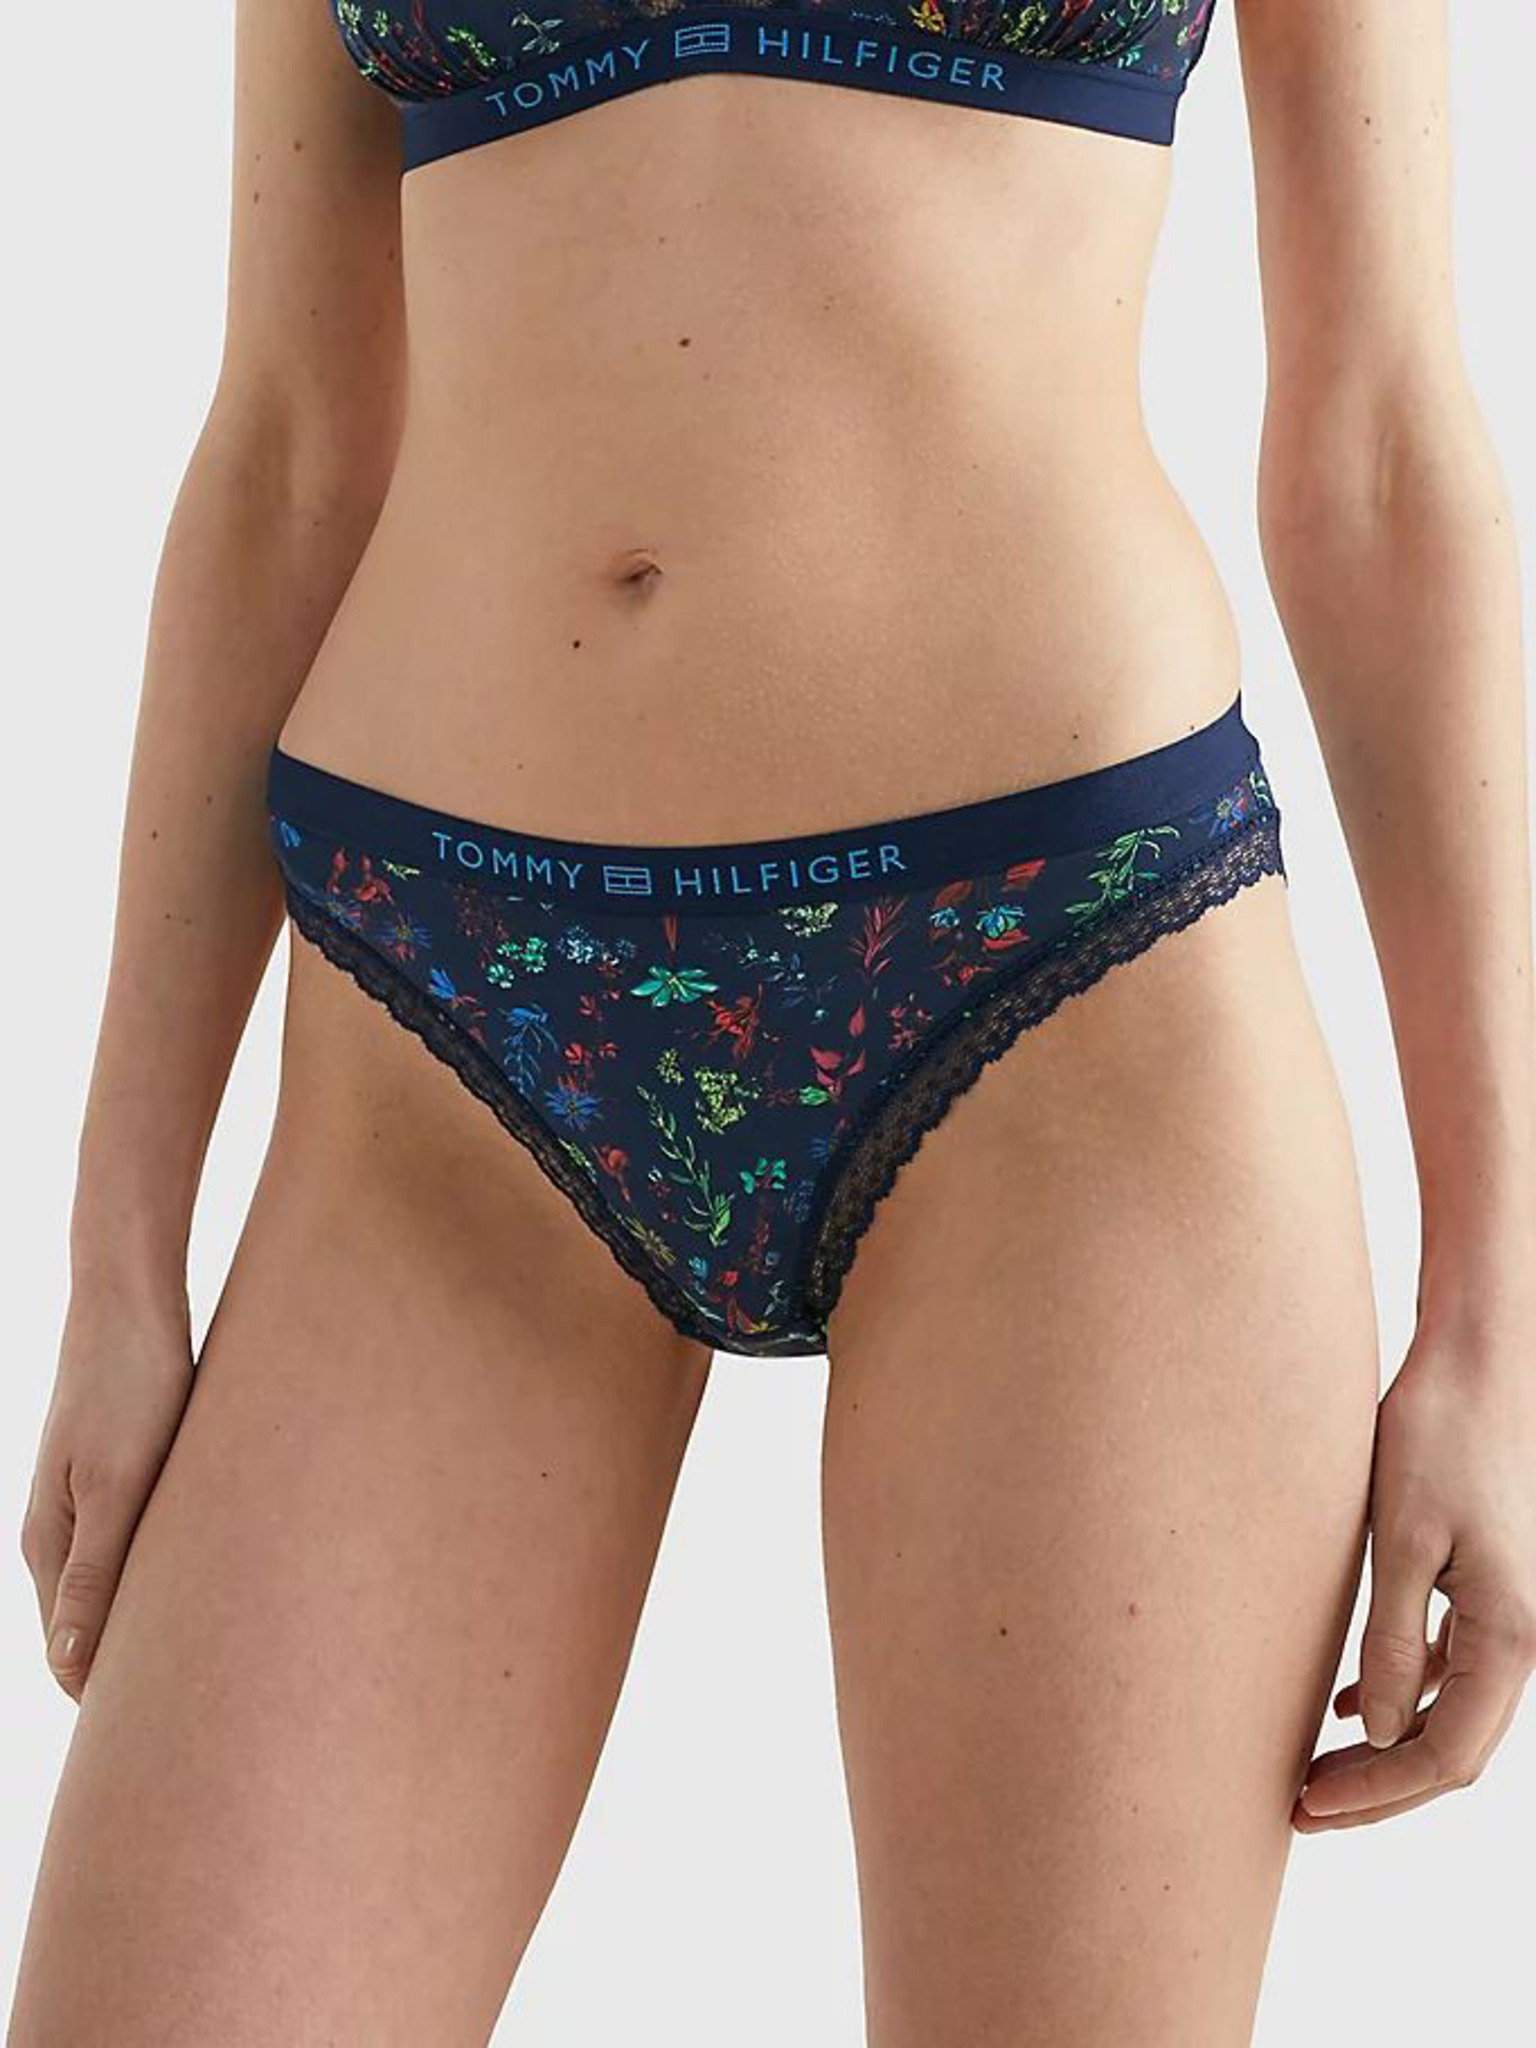 Tommy Hilfiger Underwear - Panties Bibloo.com